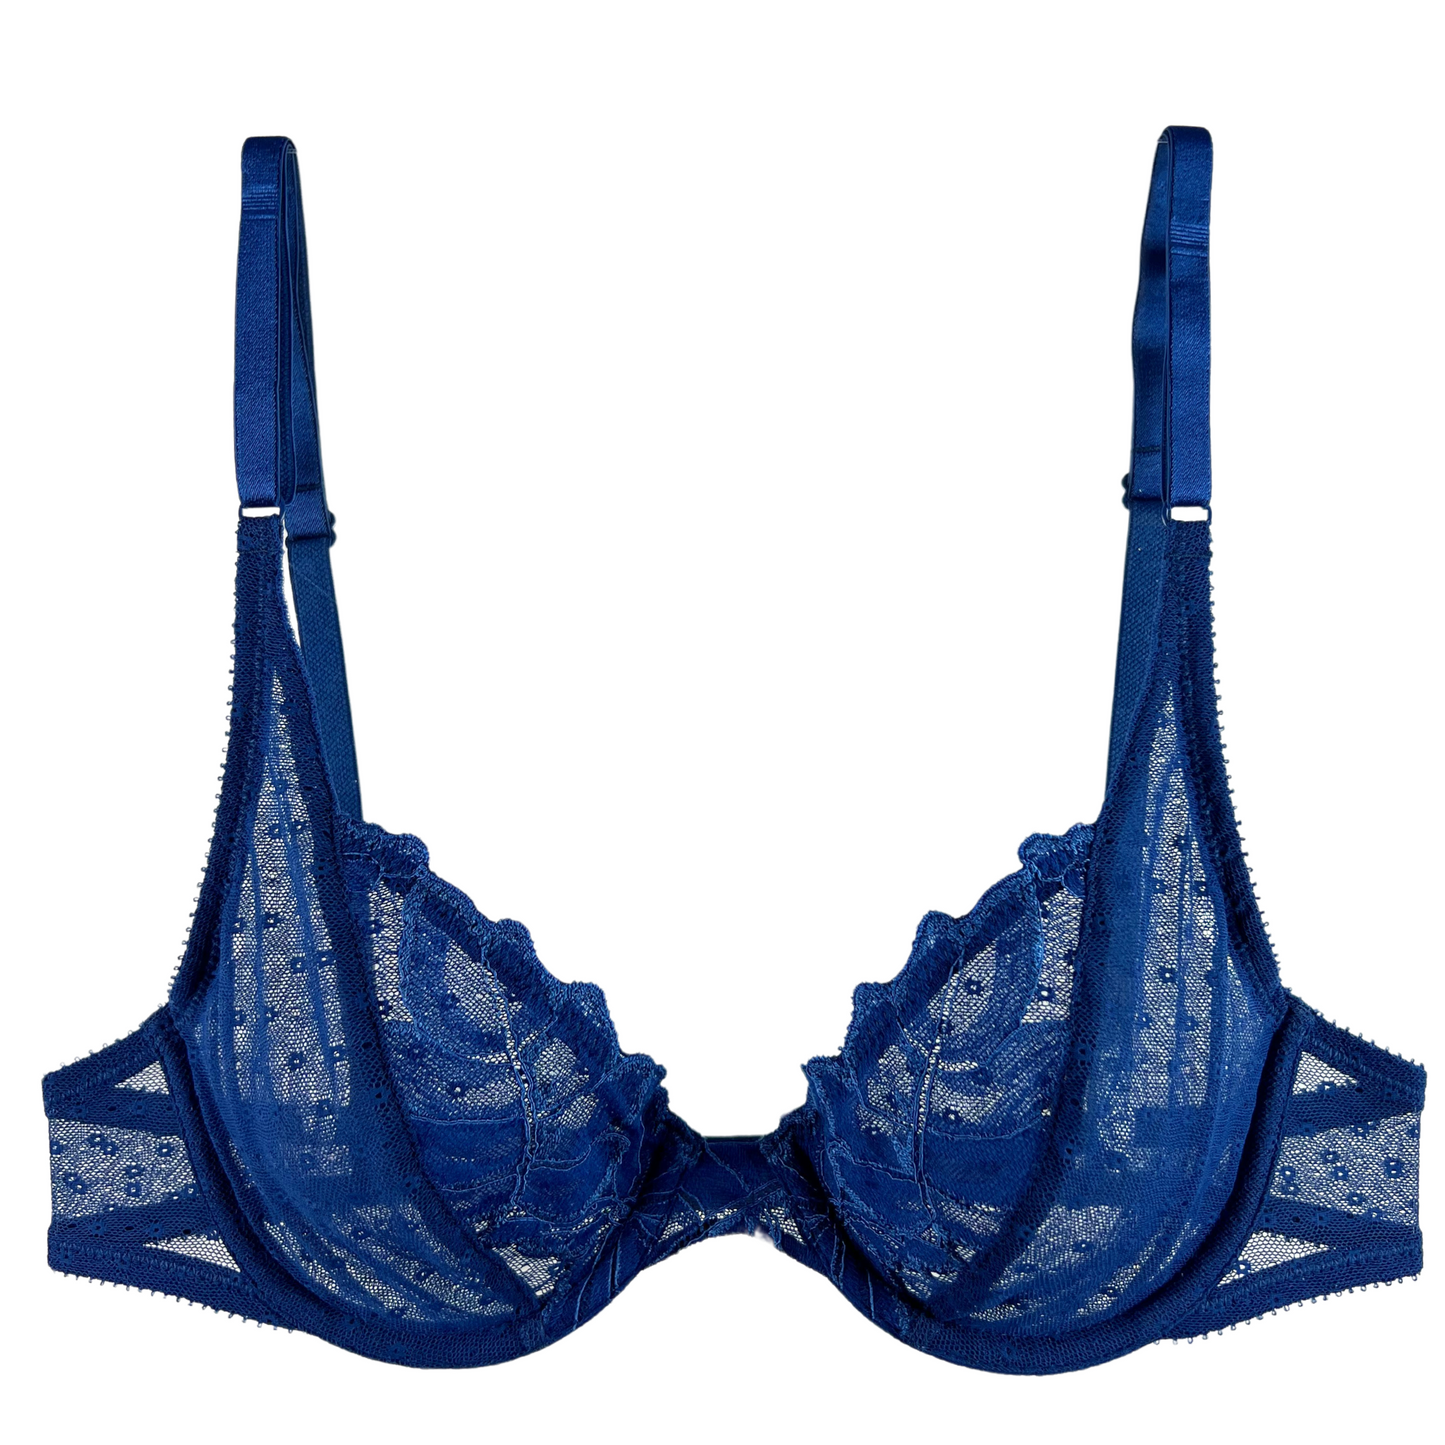 Victoria's Secret, Intimates & Sleepwear, Stunning Royal Blue Racerback  Pushup Bra Size 34 C